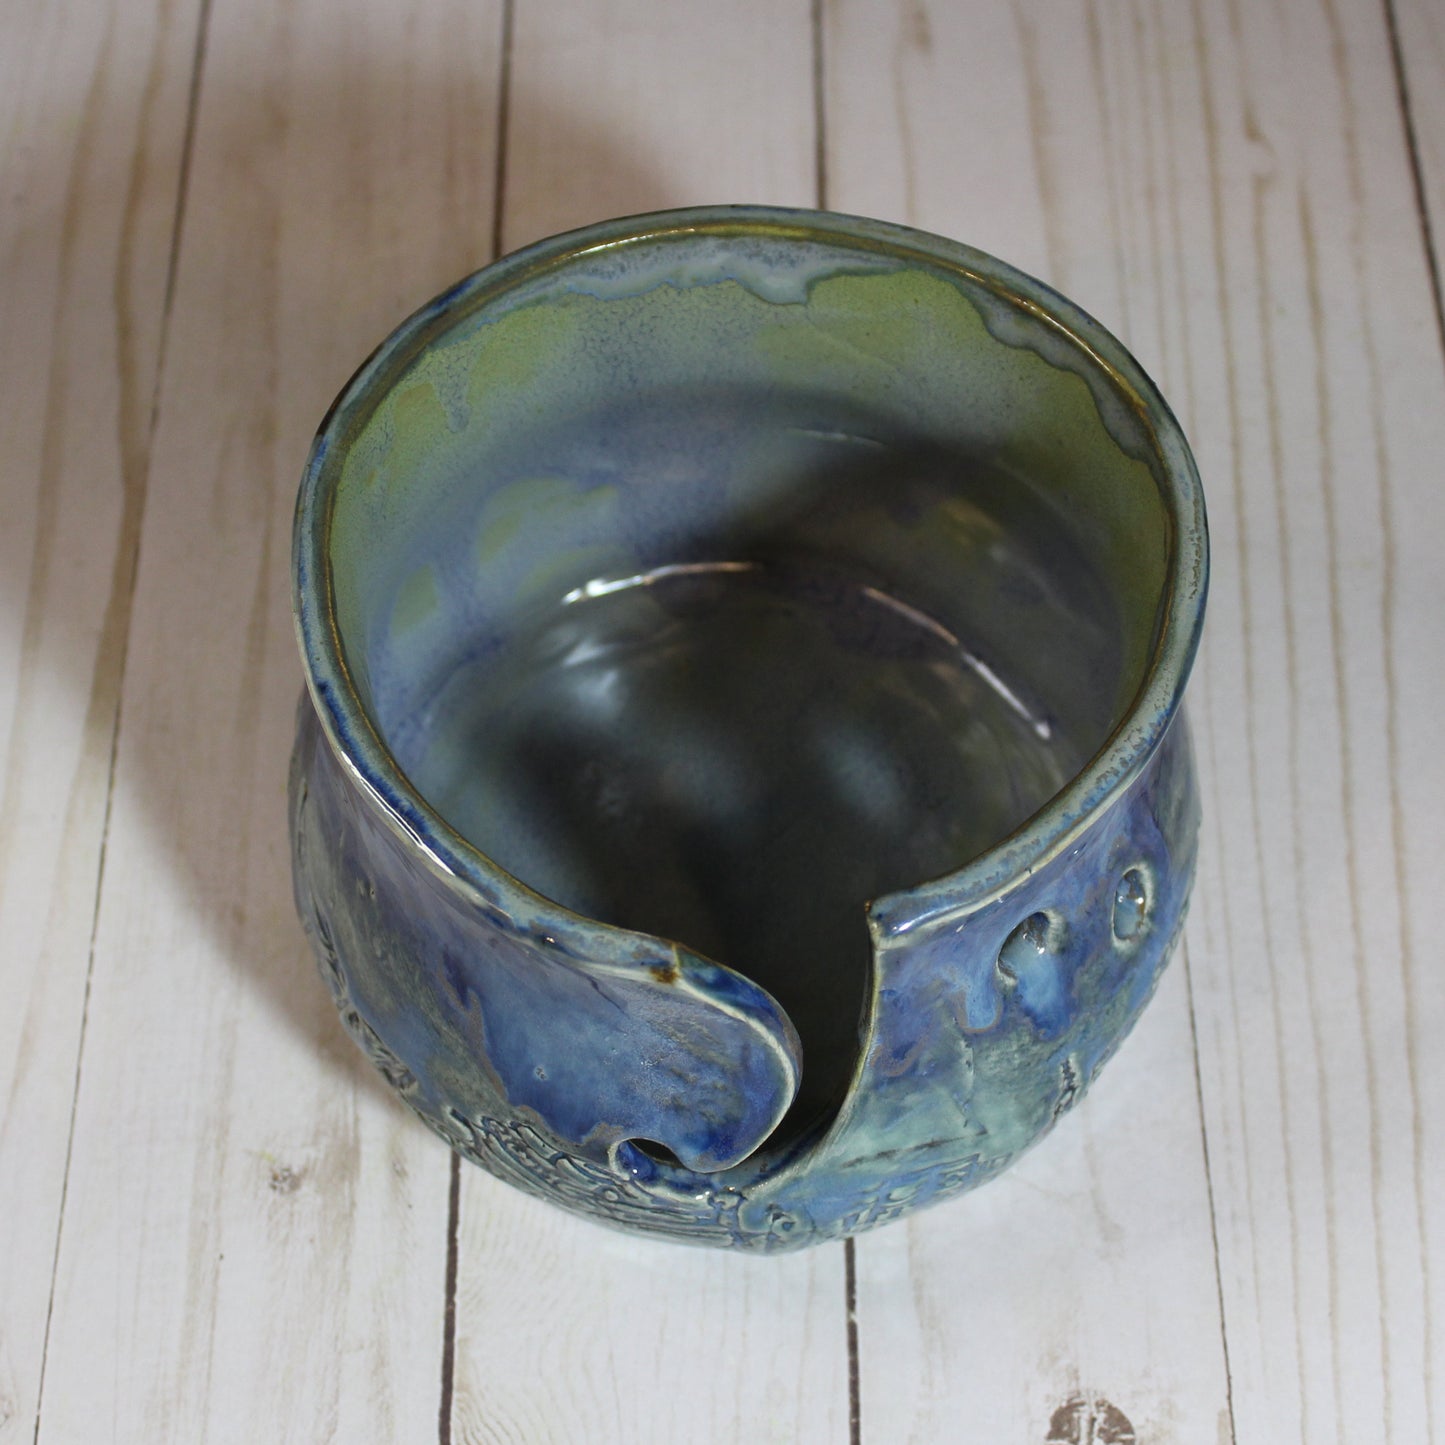 Book Witch Ceramic Yarn Bowl